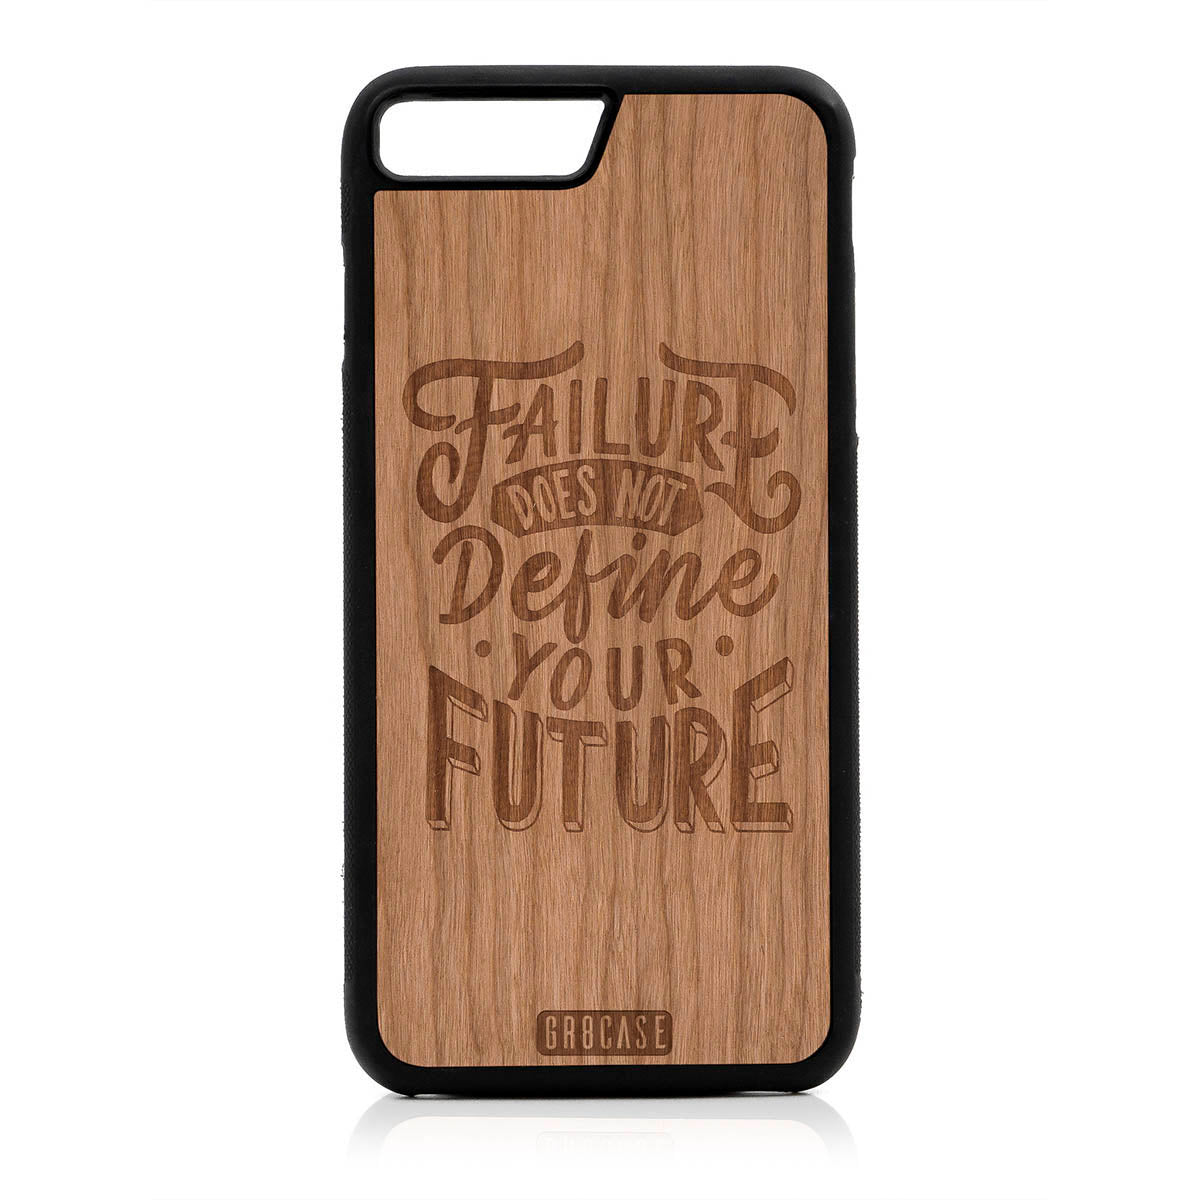 Failure Does Not Define You Future Design Wood Case For iPhone 7 Plus / 8 Plus by GR8CASE